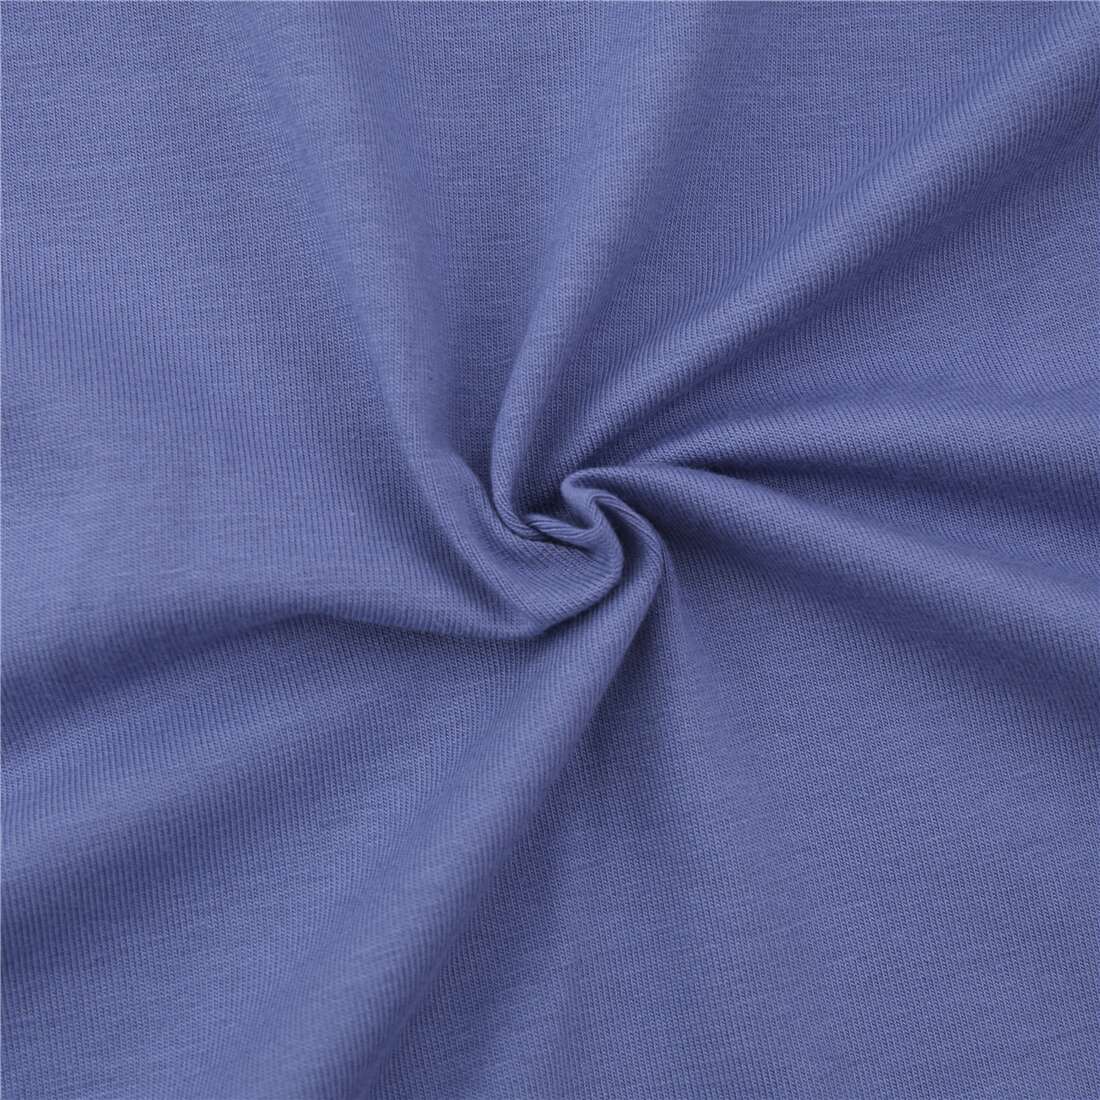 Solid cornflower blue cotton knit fabric by Robert Kaufman - modeS4u